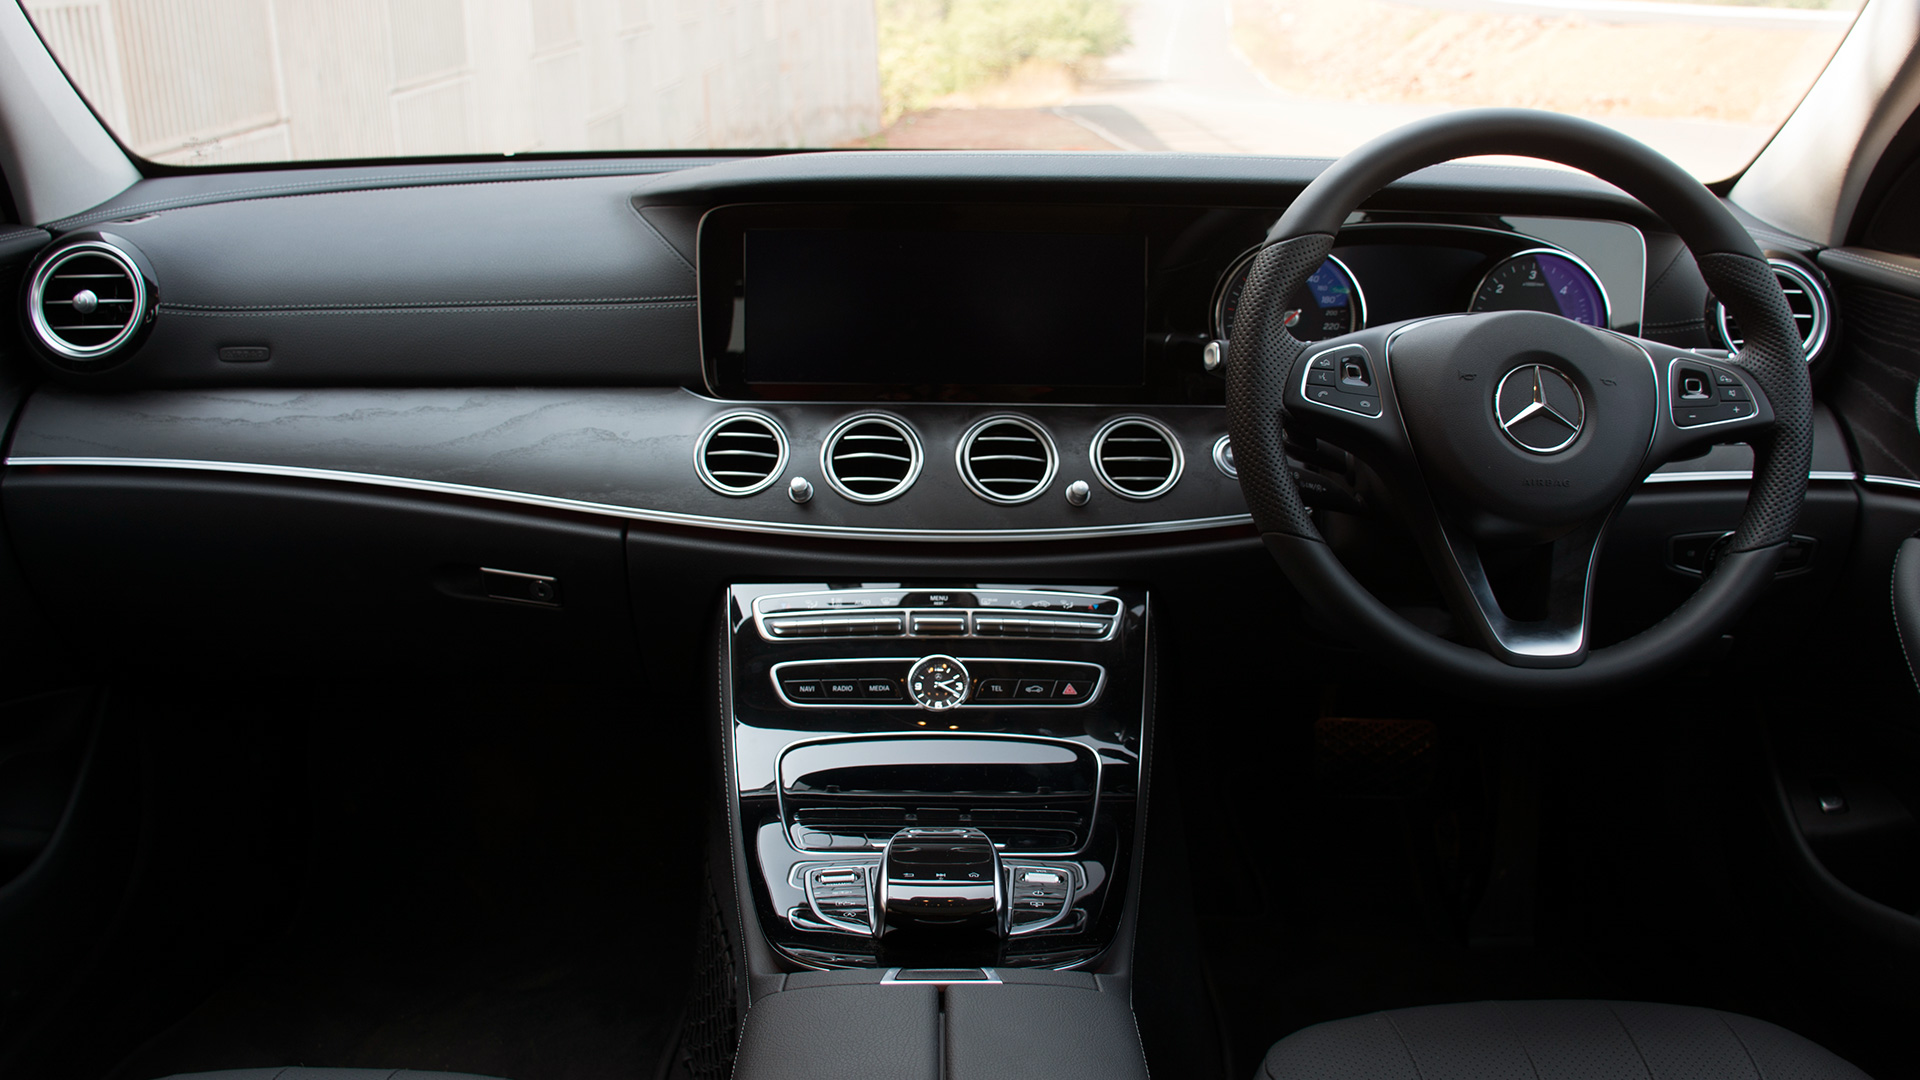 Mercedes Benz Eclass 17 E 350 Lwb Diesel Interior Car Photos Overdrive